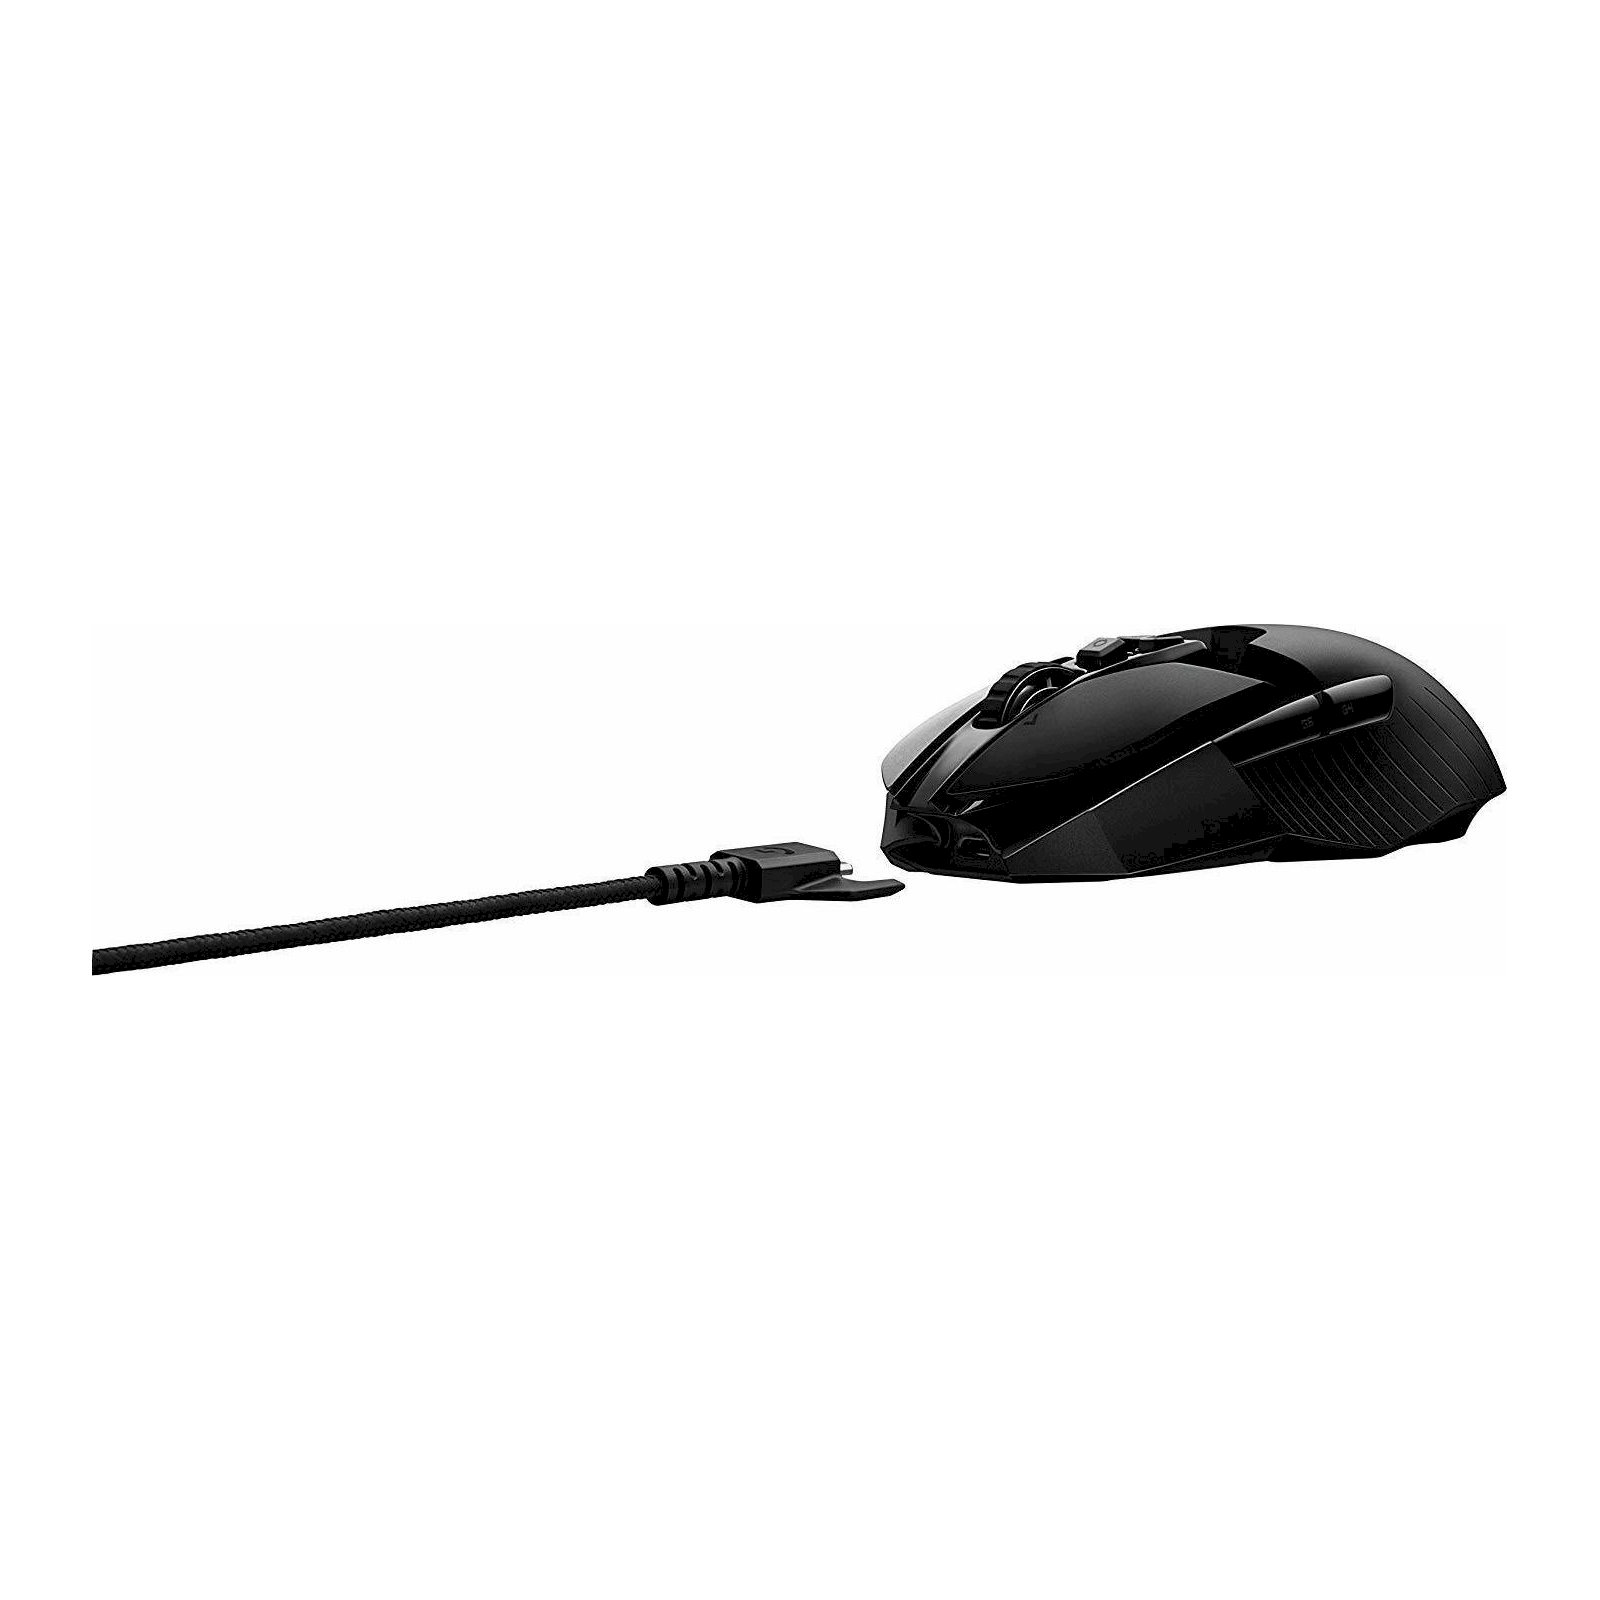 Logitech G903 HERO 25k Lightspeed Wireless Gaming Mouse